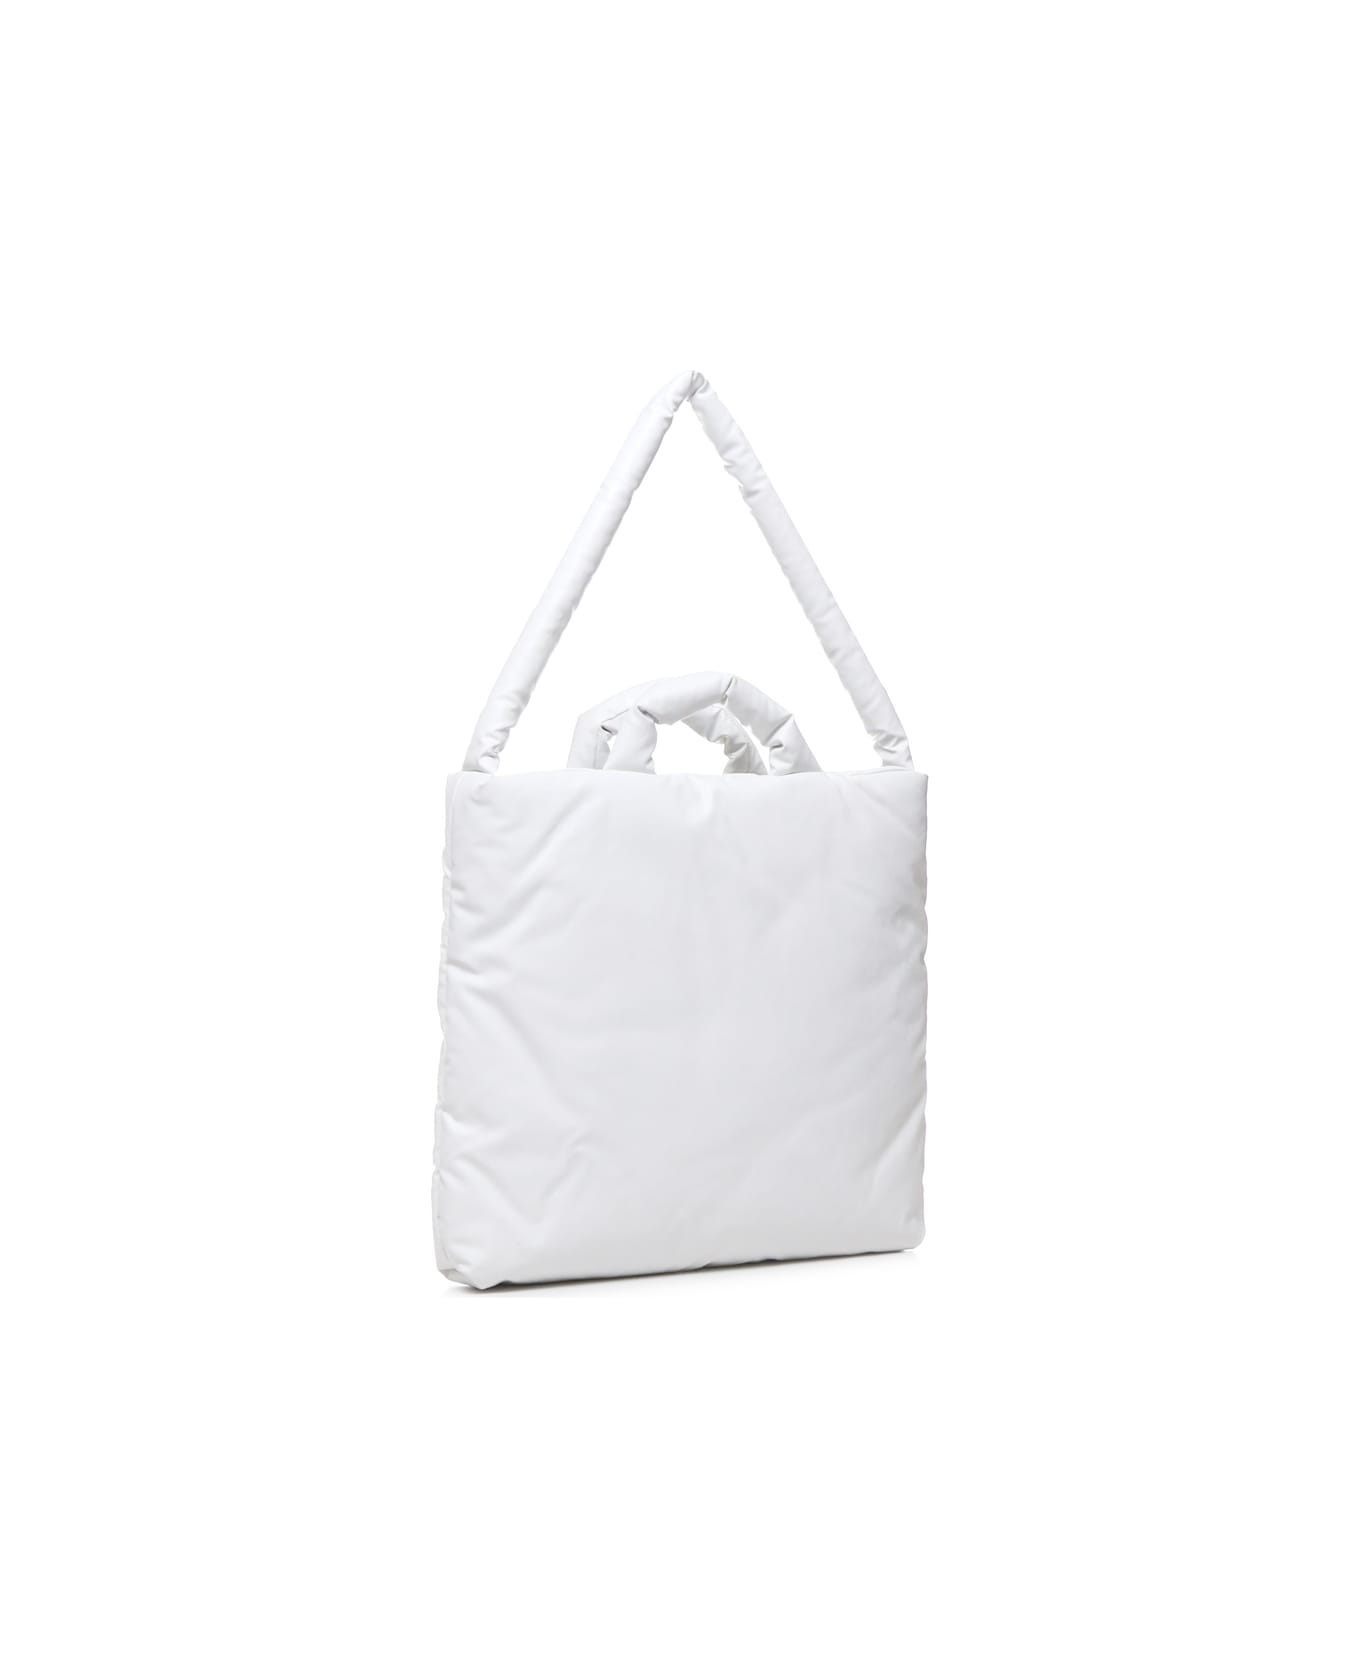 KASSL Editions Medium Oil Pillow Bag - White